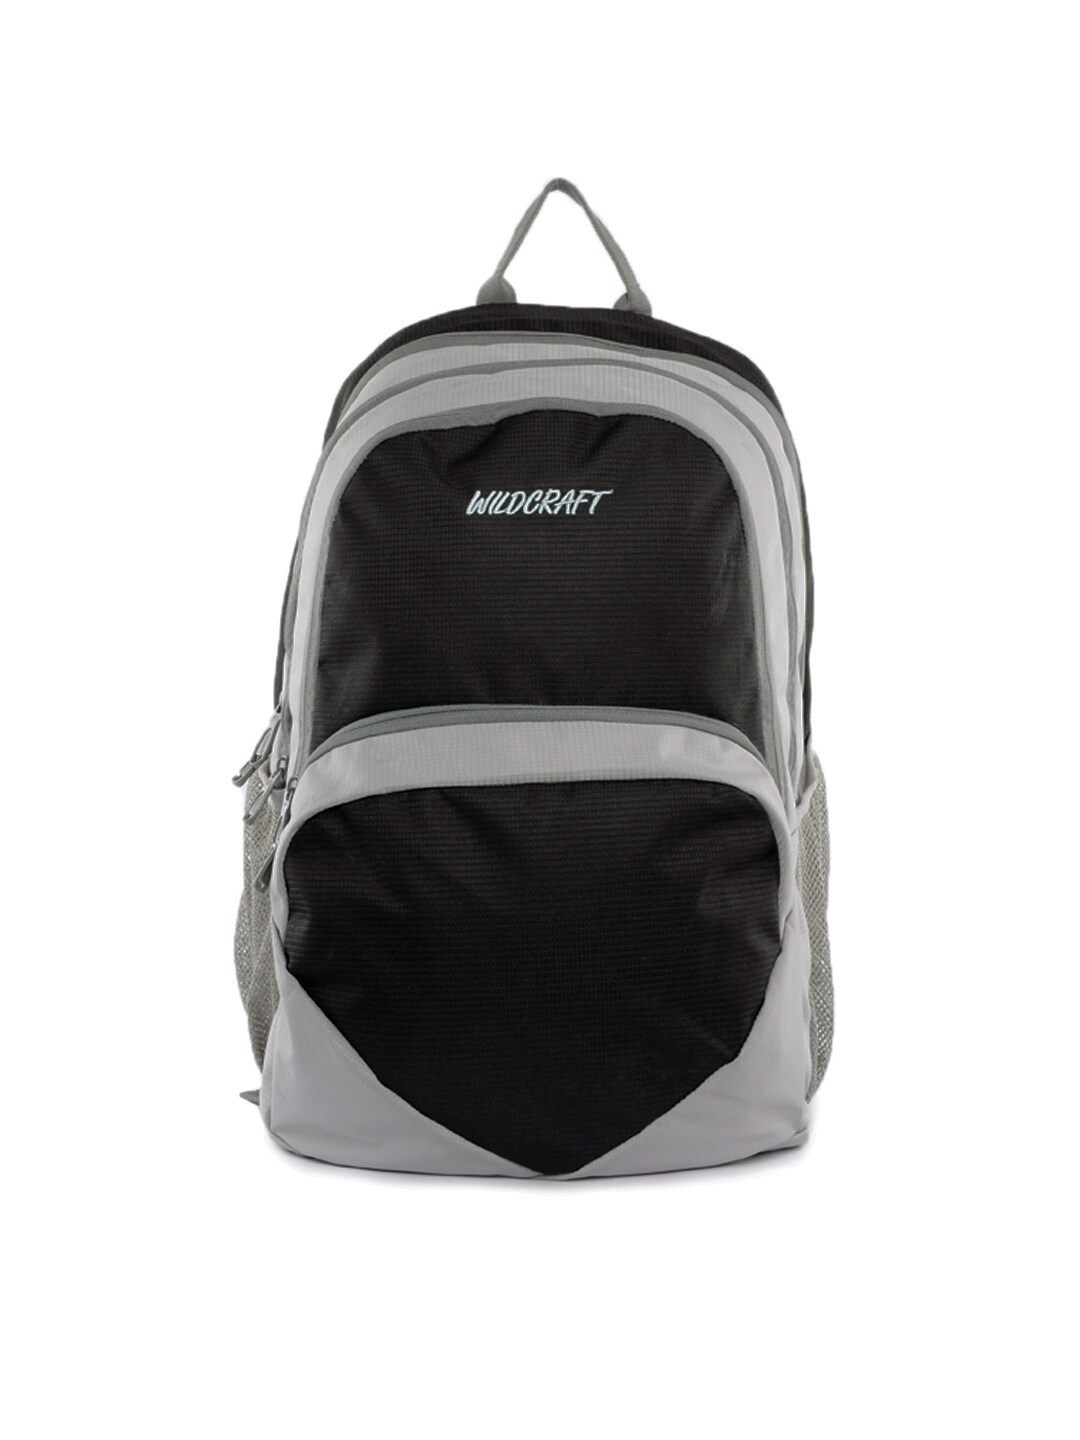 Wildcraft Unisex Black and Grey Backpack